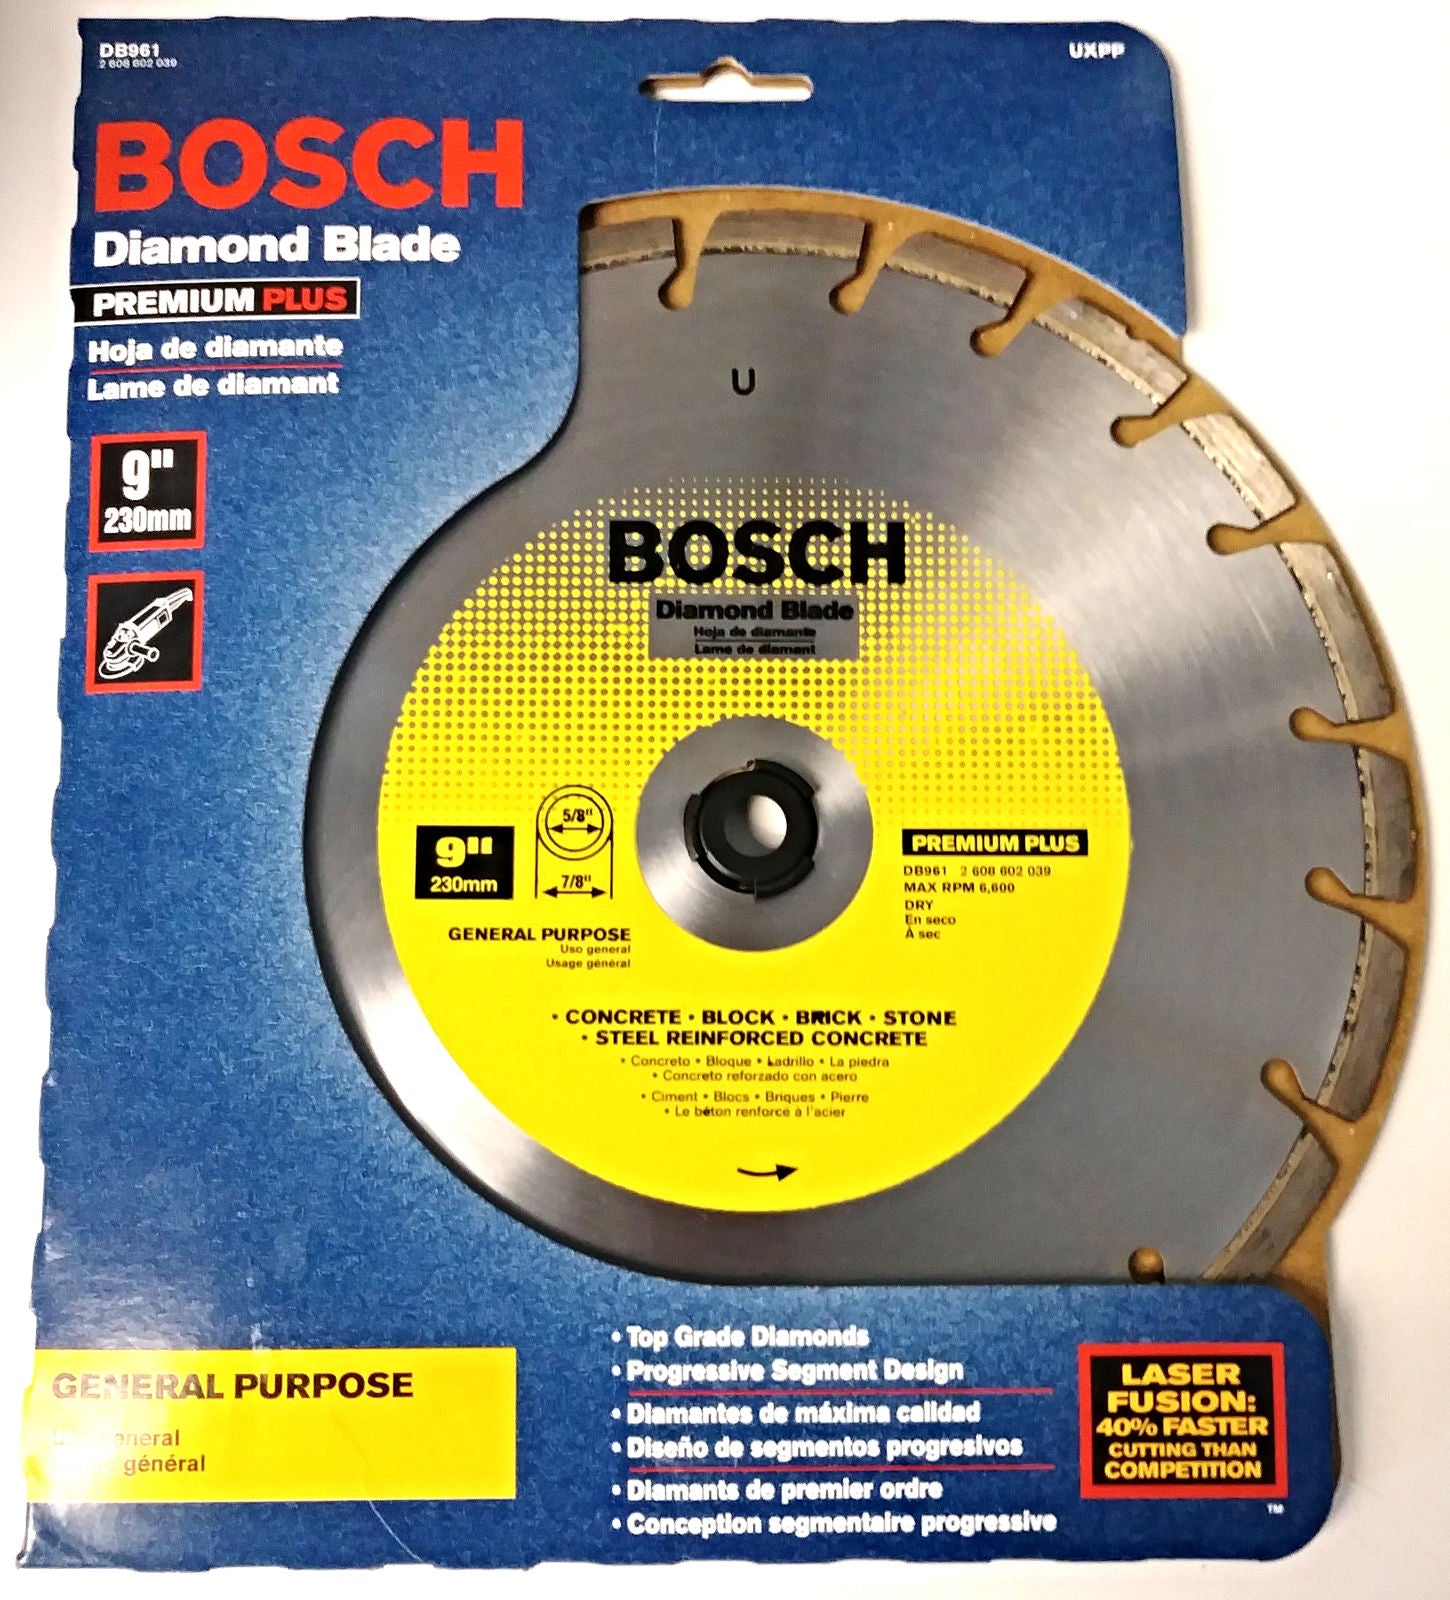 Bosch DB961 9" Premium Plus General Purpose Diamond Blade Switzerland